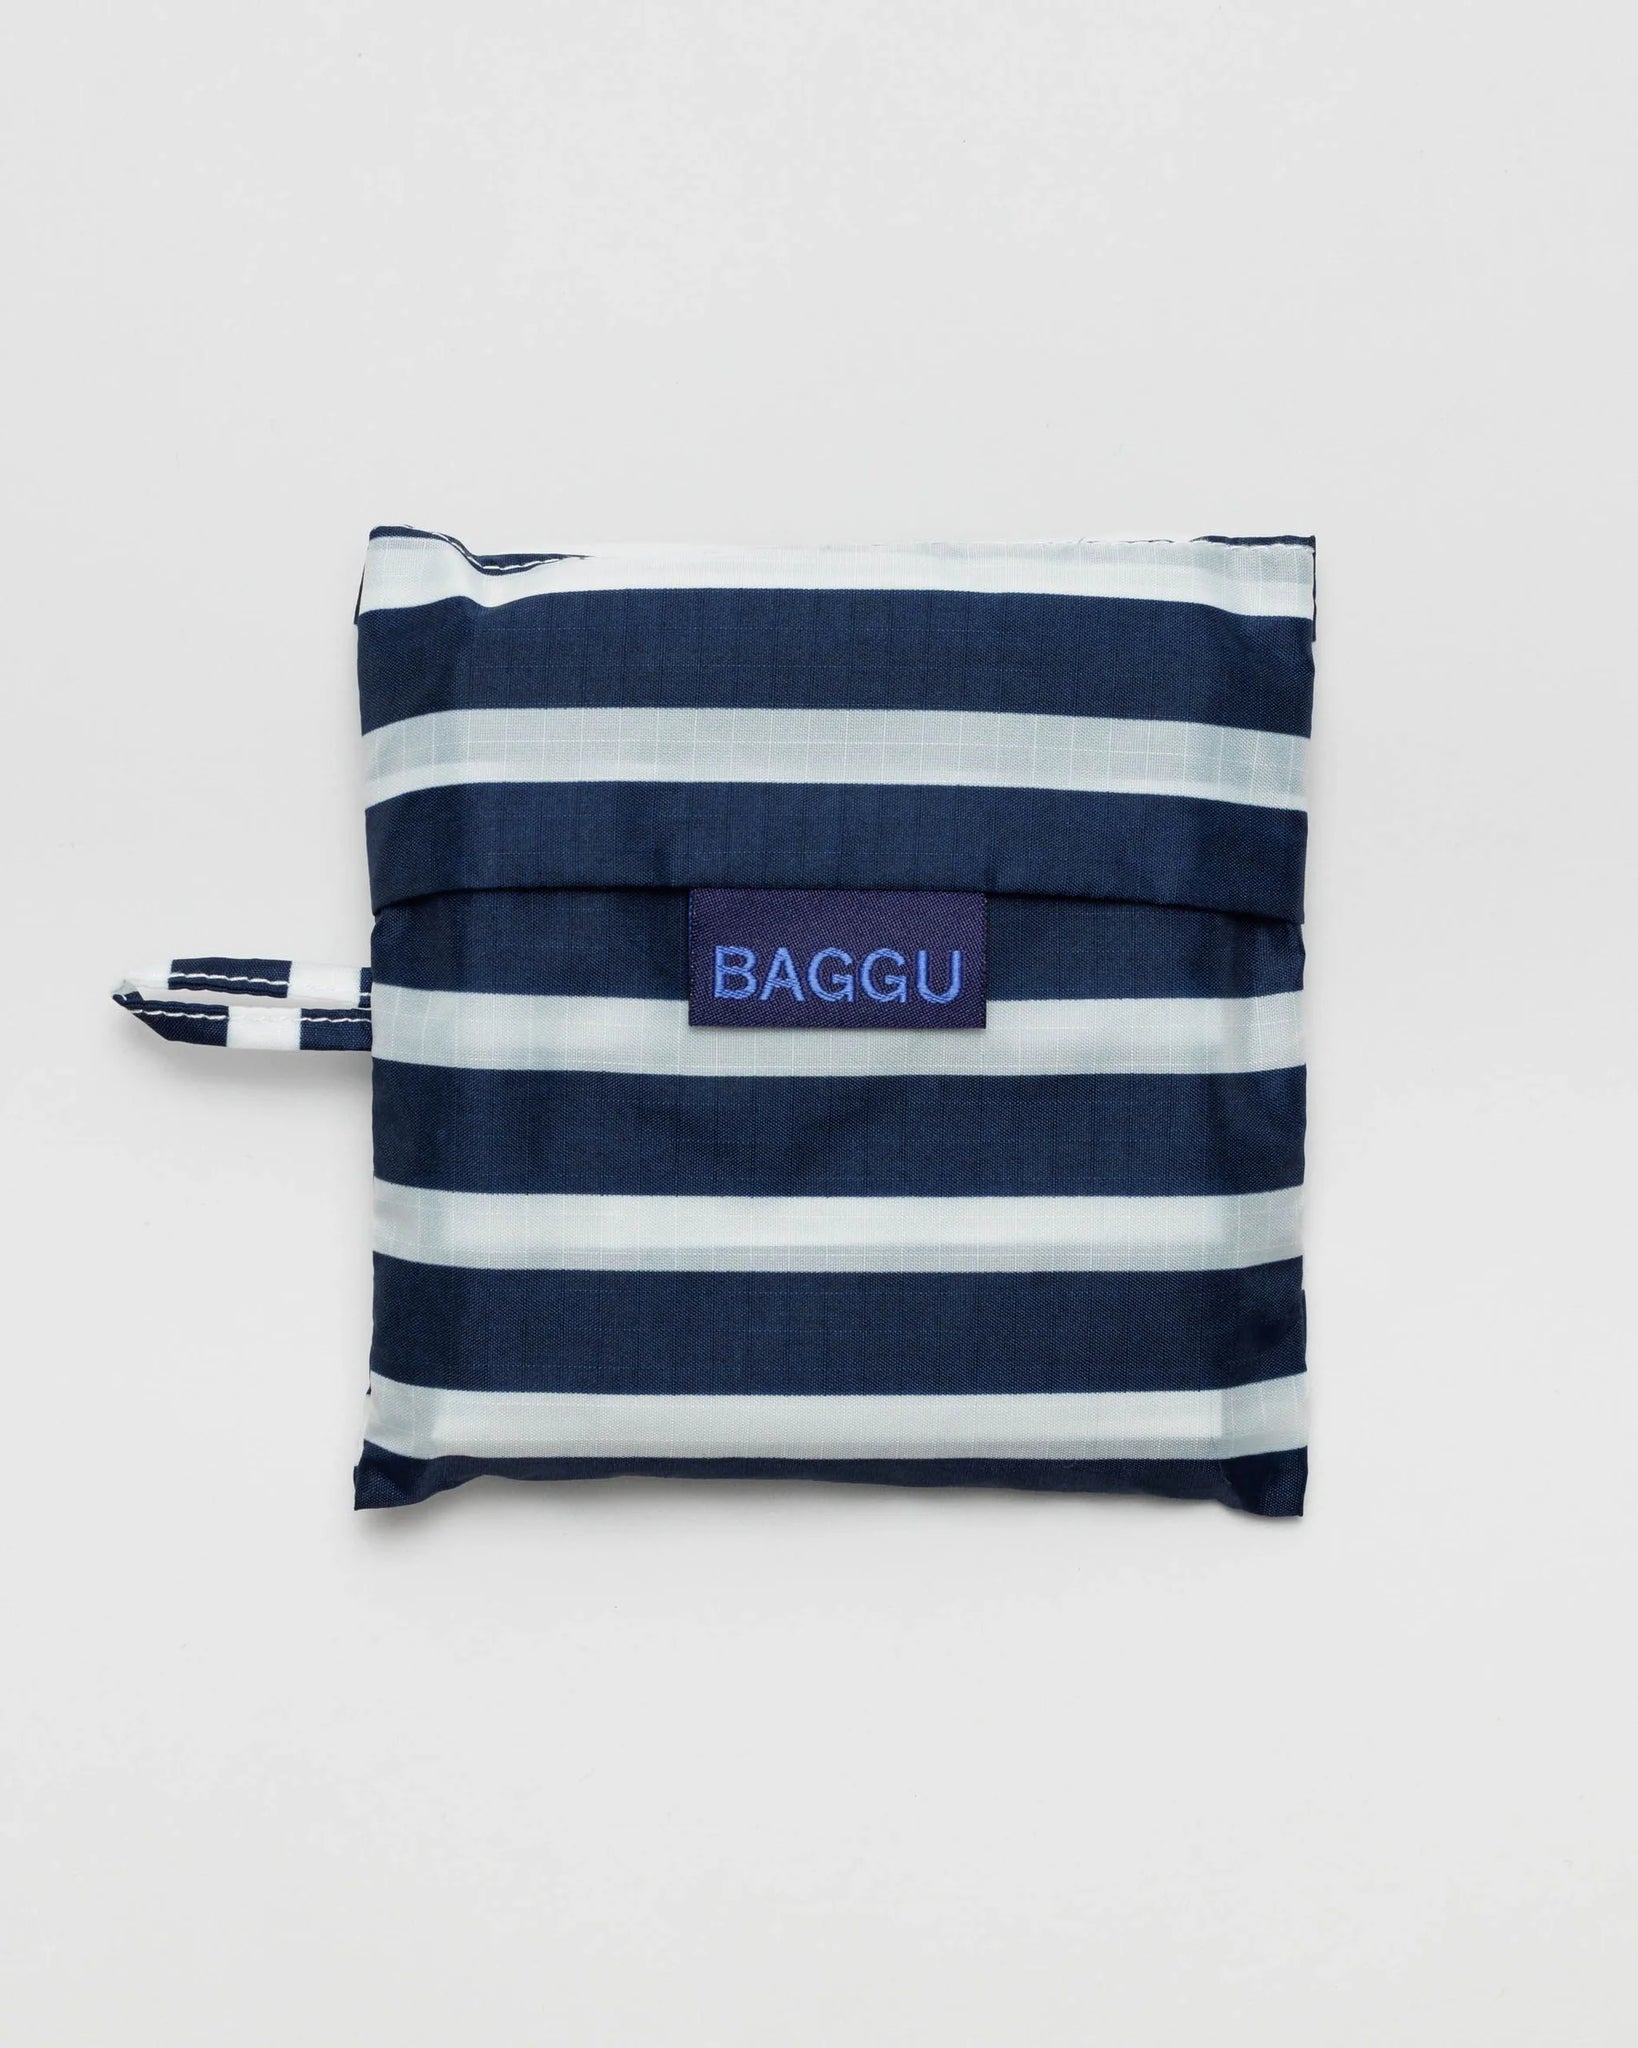 Marineblau gestreifte recycelte Standard-Bagu-Tasche